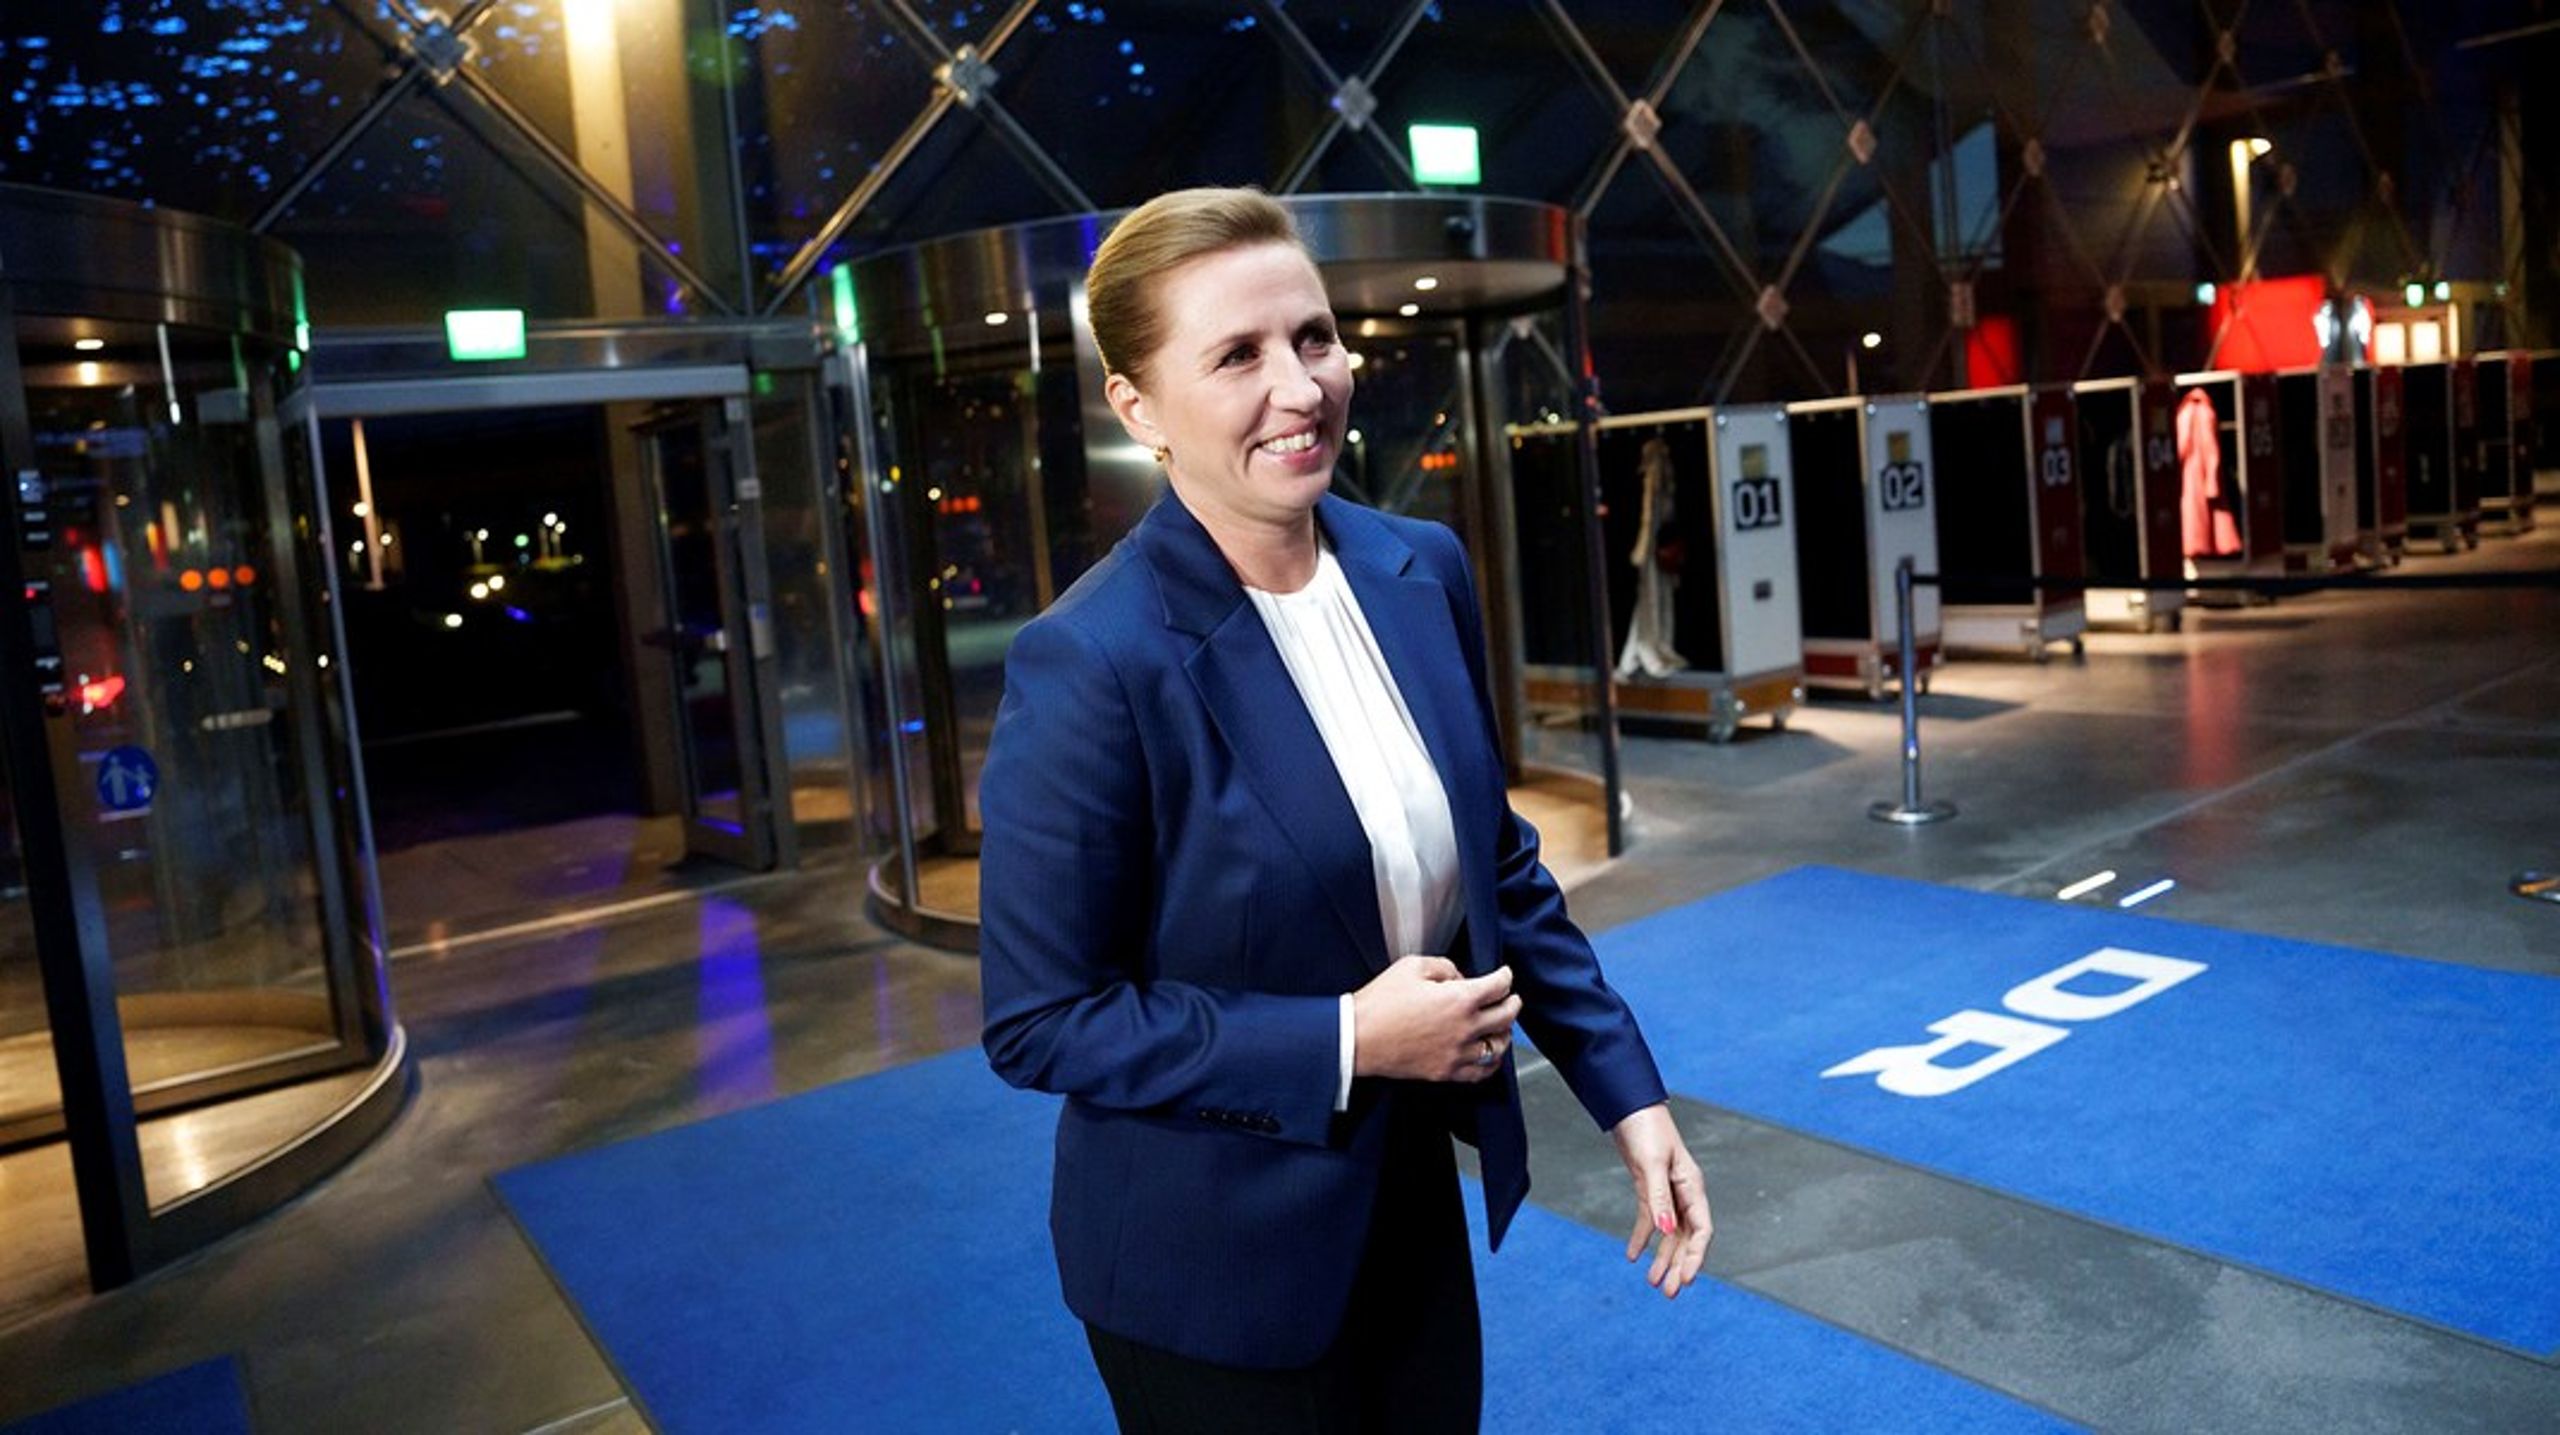 Mette Frederiksen skal "op i et andet gear", hvis hun vil beholde statsministerposten, lyder meldingen fra Altingets politiske kommentator ovenpå den første debat blandt de tre statsministerkandidater.